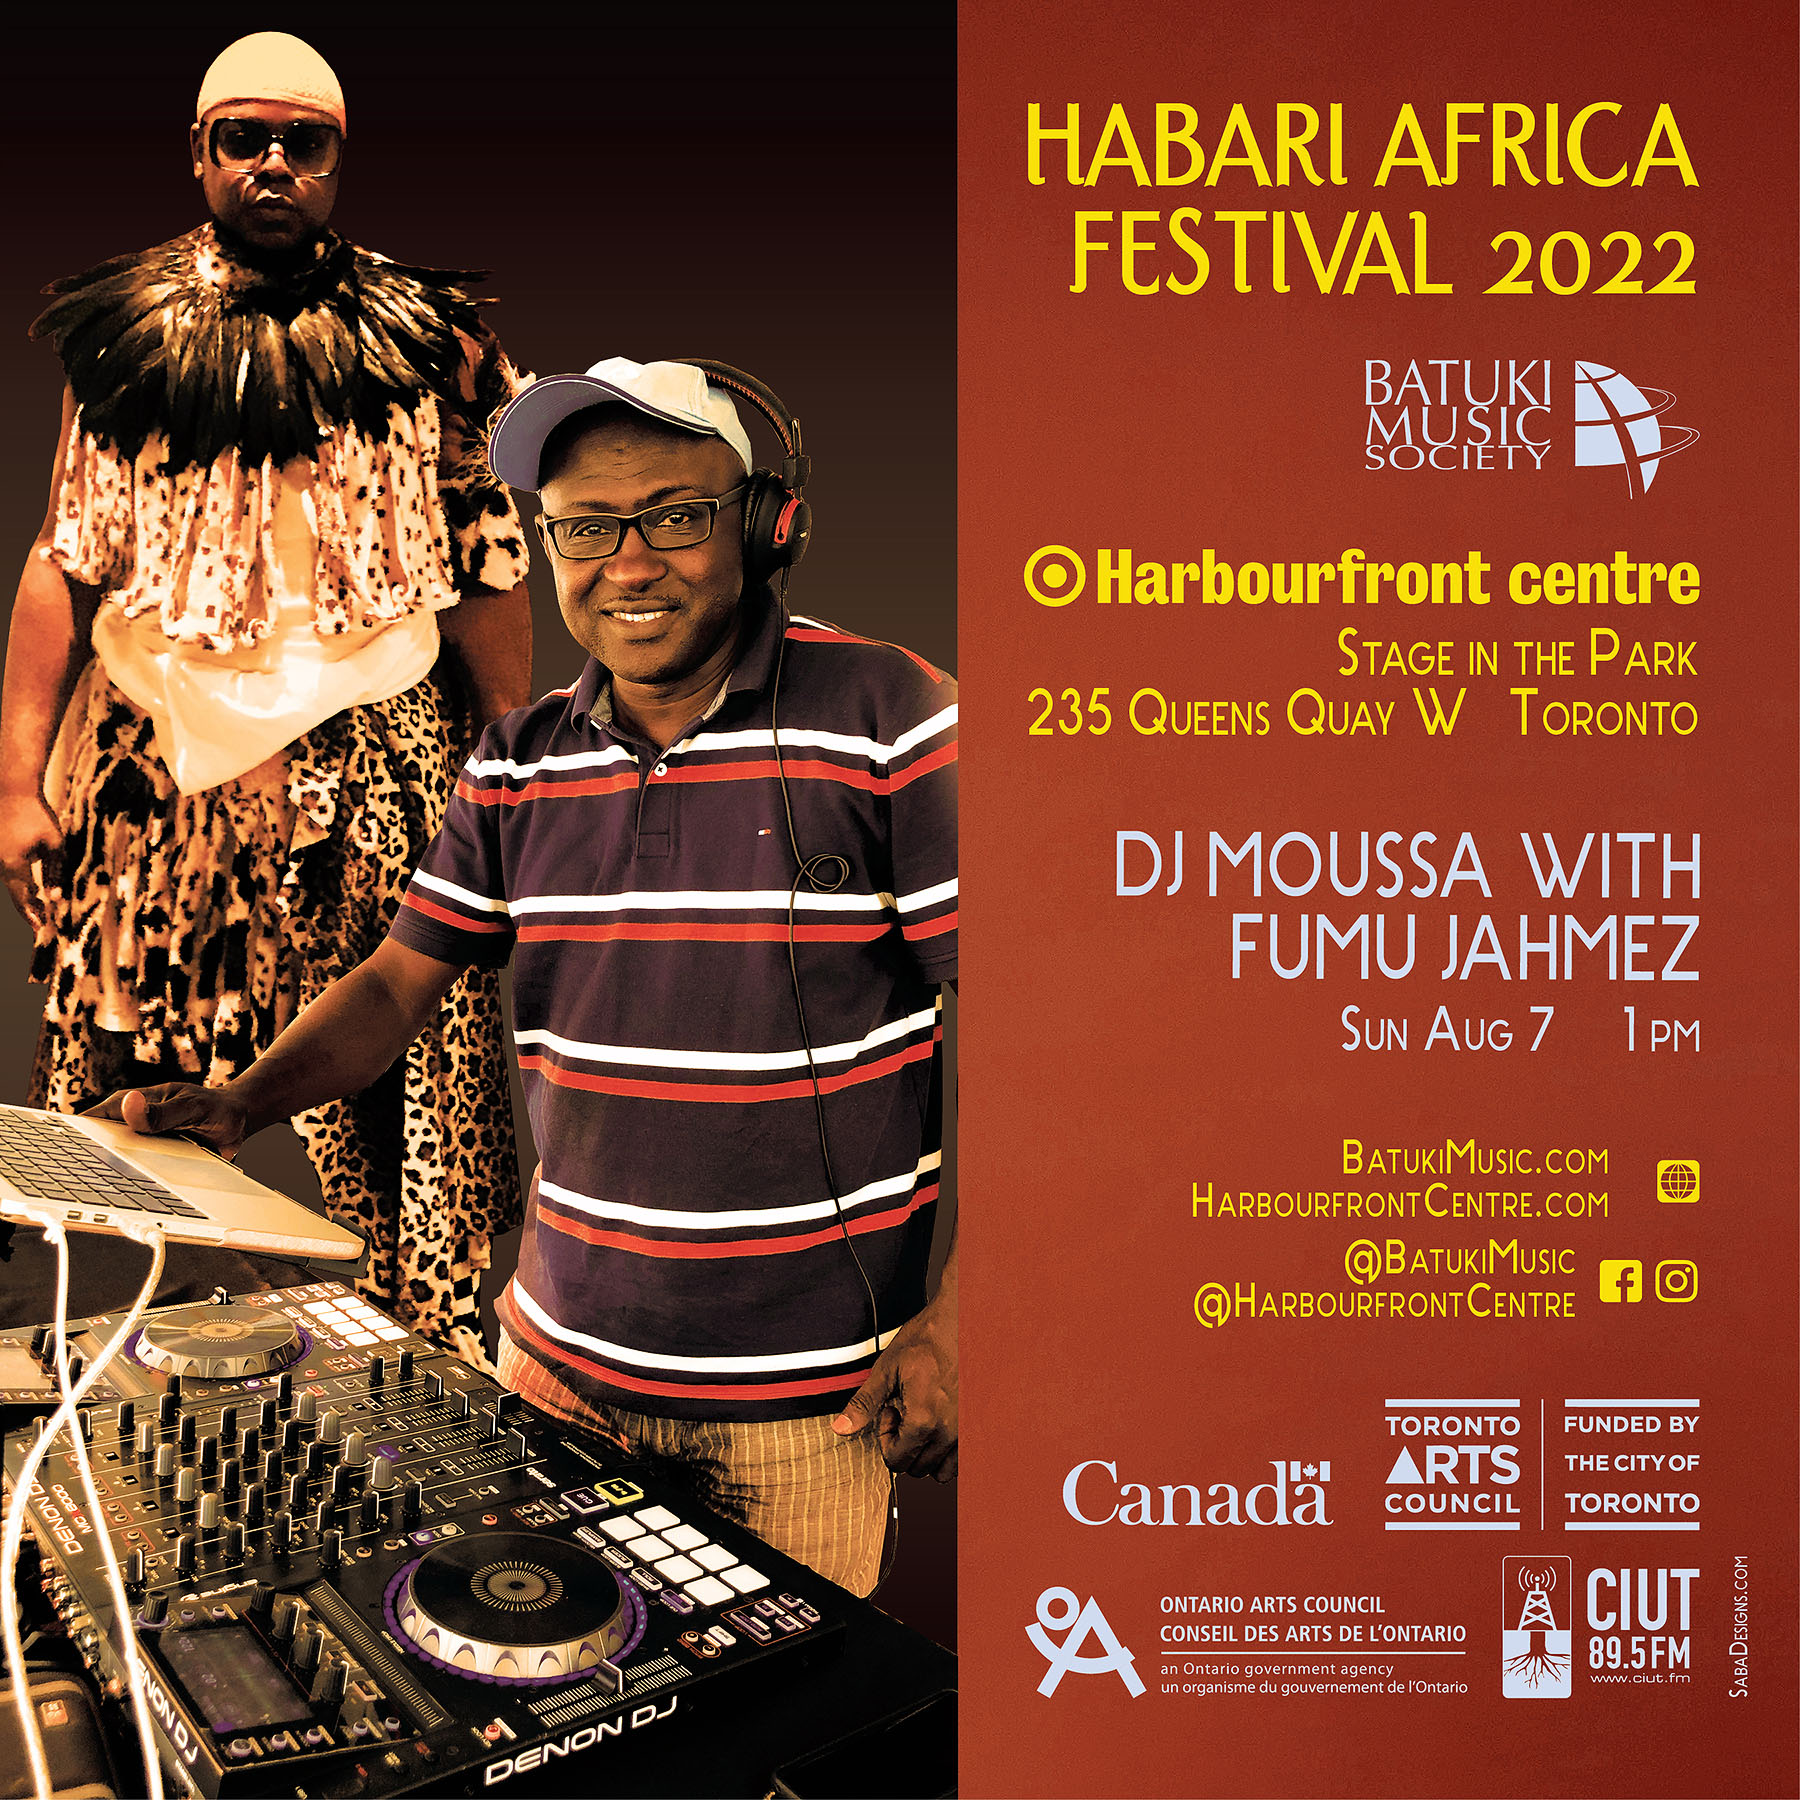 Habari Africa Live Festival 2022 by Batuki Music Society DJ Moussa Fumu Jahmez